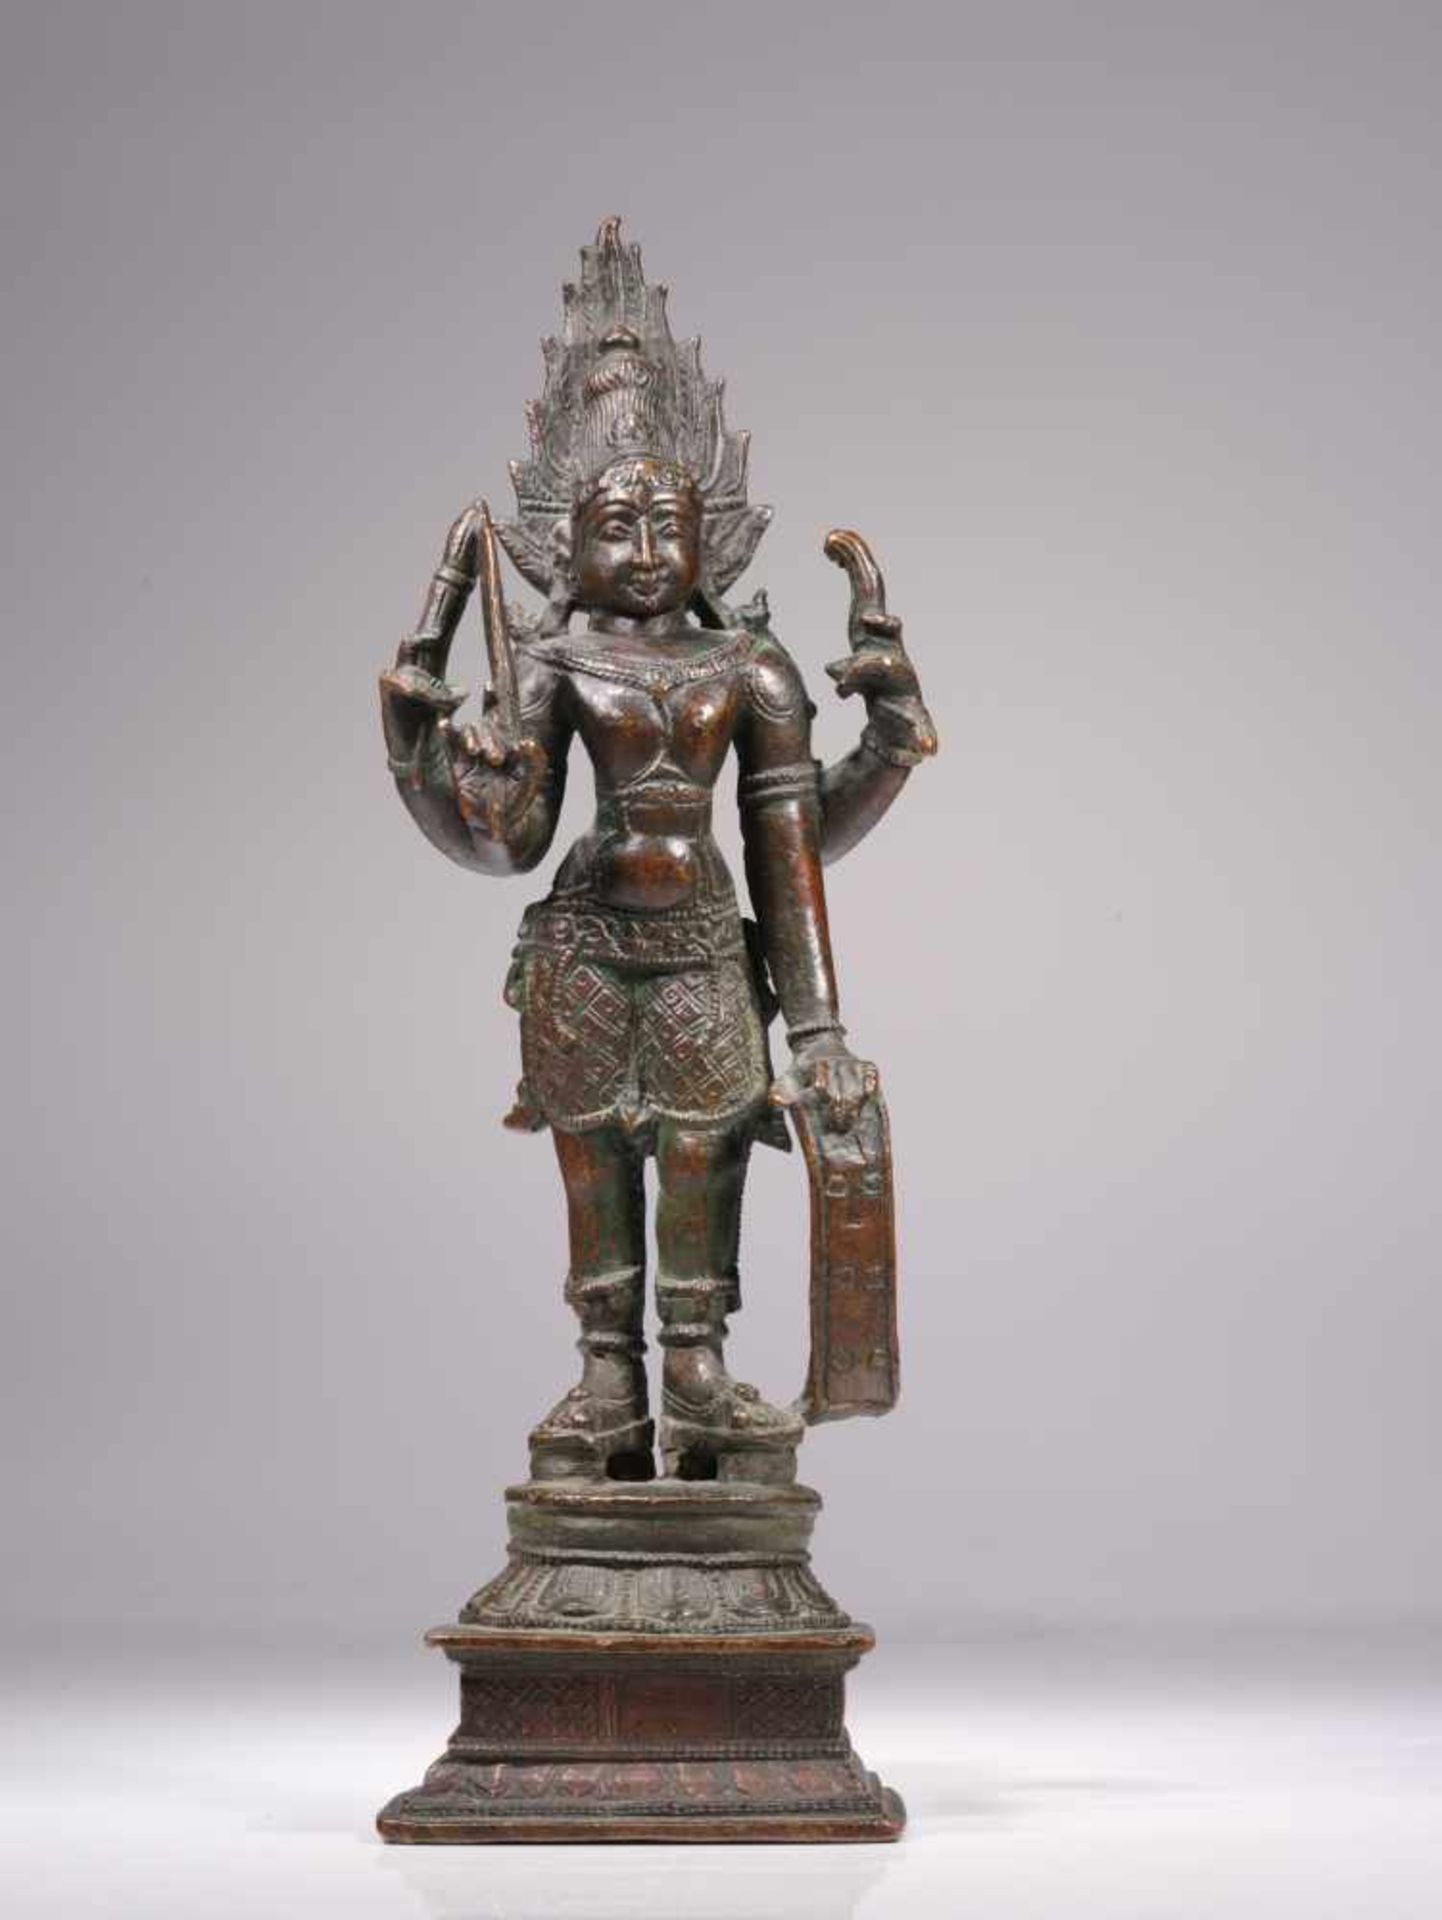 VIRABHADRA-SHRINEBronze,India 18th centuryDimensions: Height 23 cm / Wide 7 cm / Depth 6,5 cmWeight: